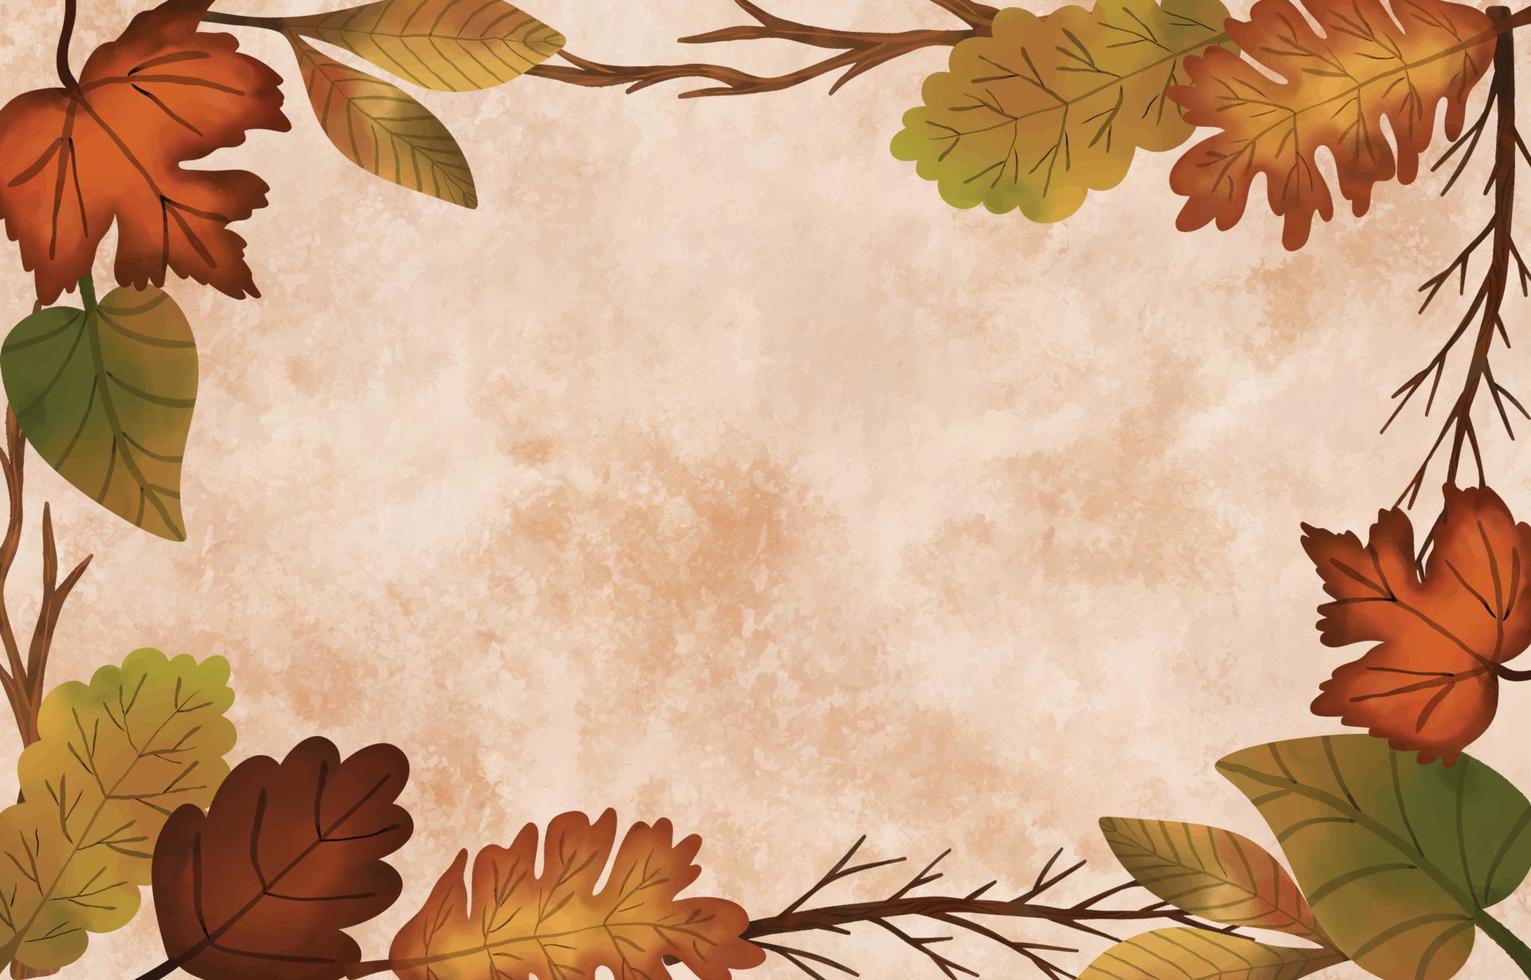 Fallen Leaves Autumn Background vector